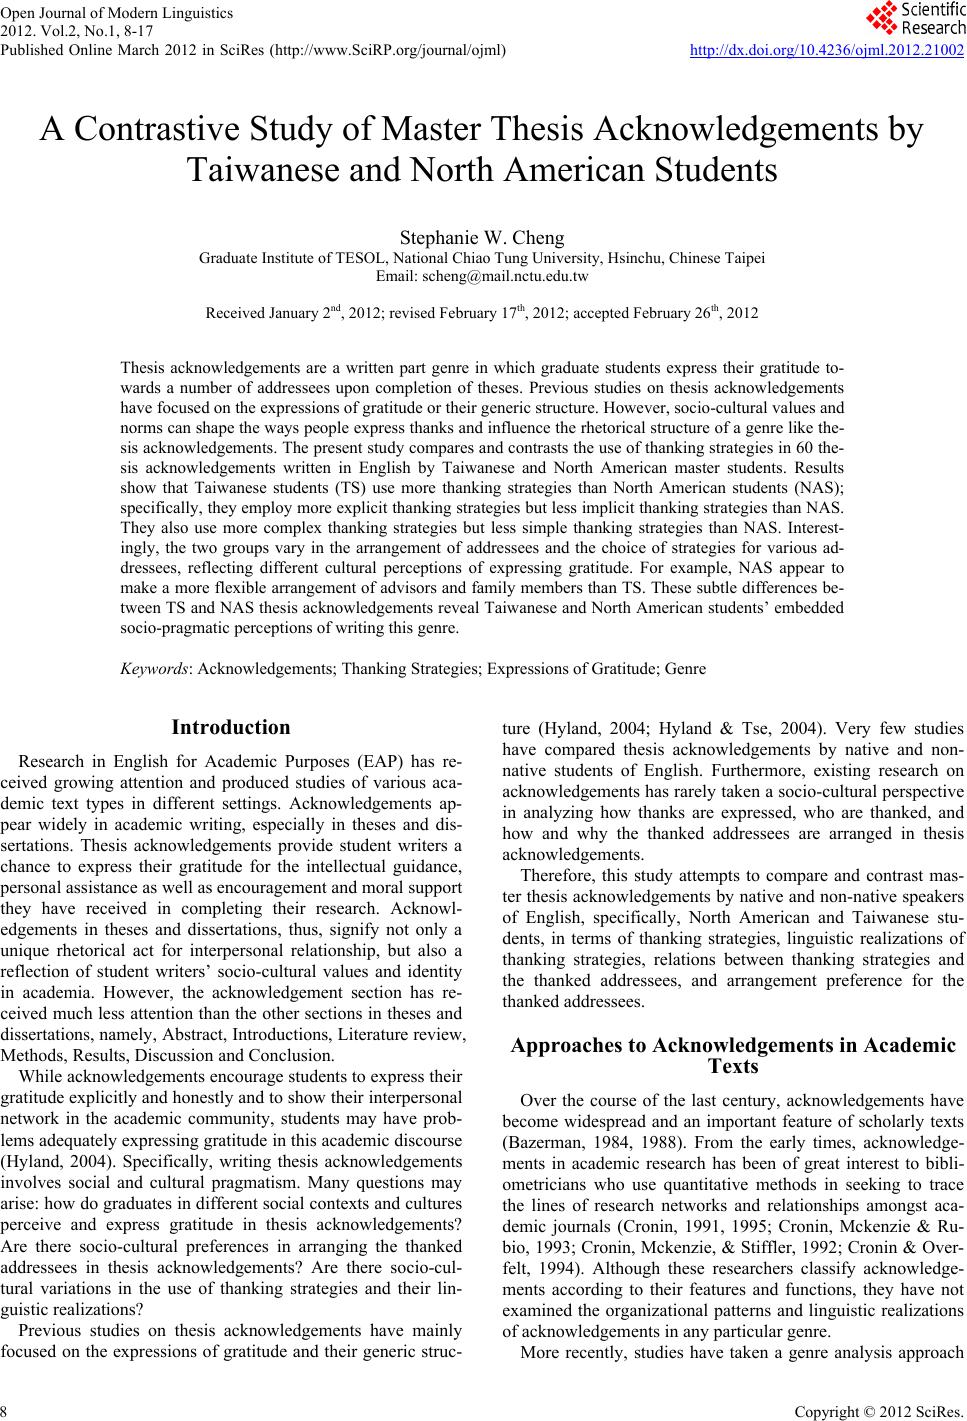 Dissertation abstract journal university of phoenix